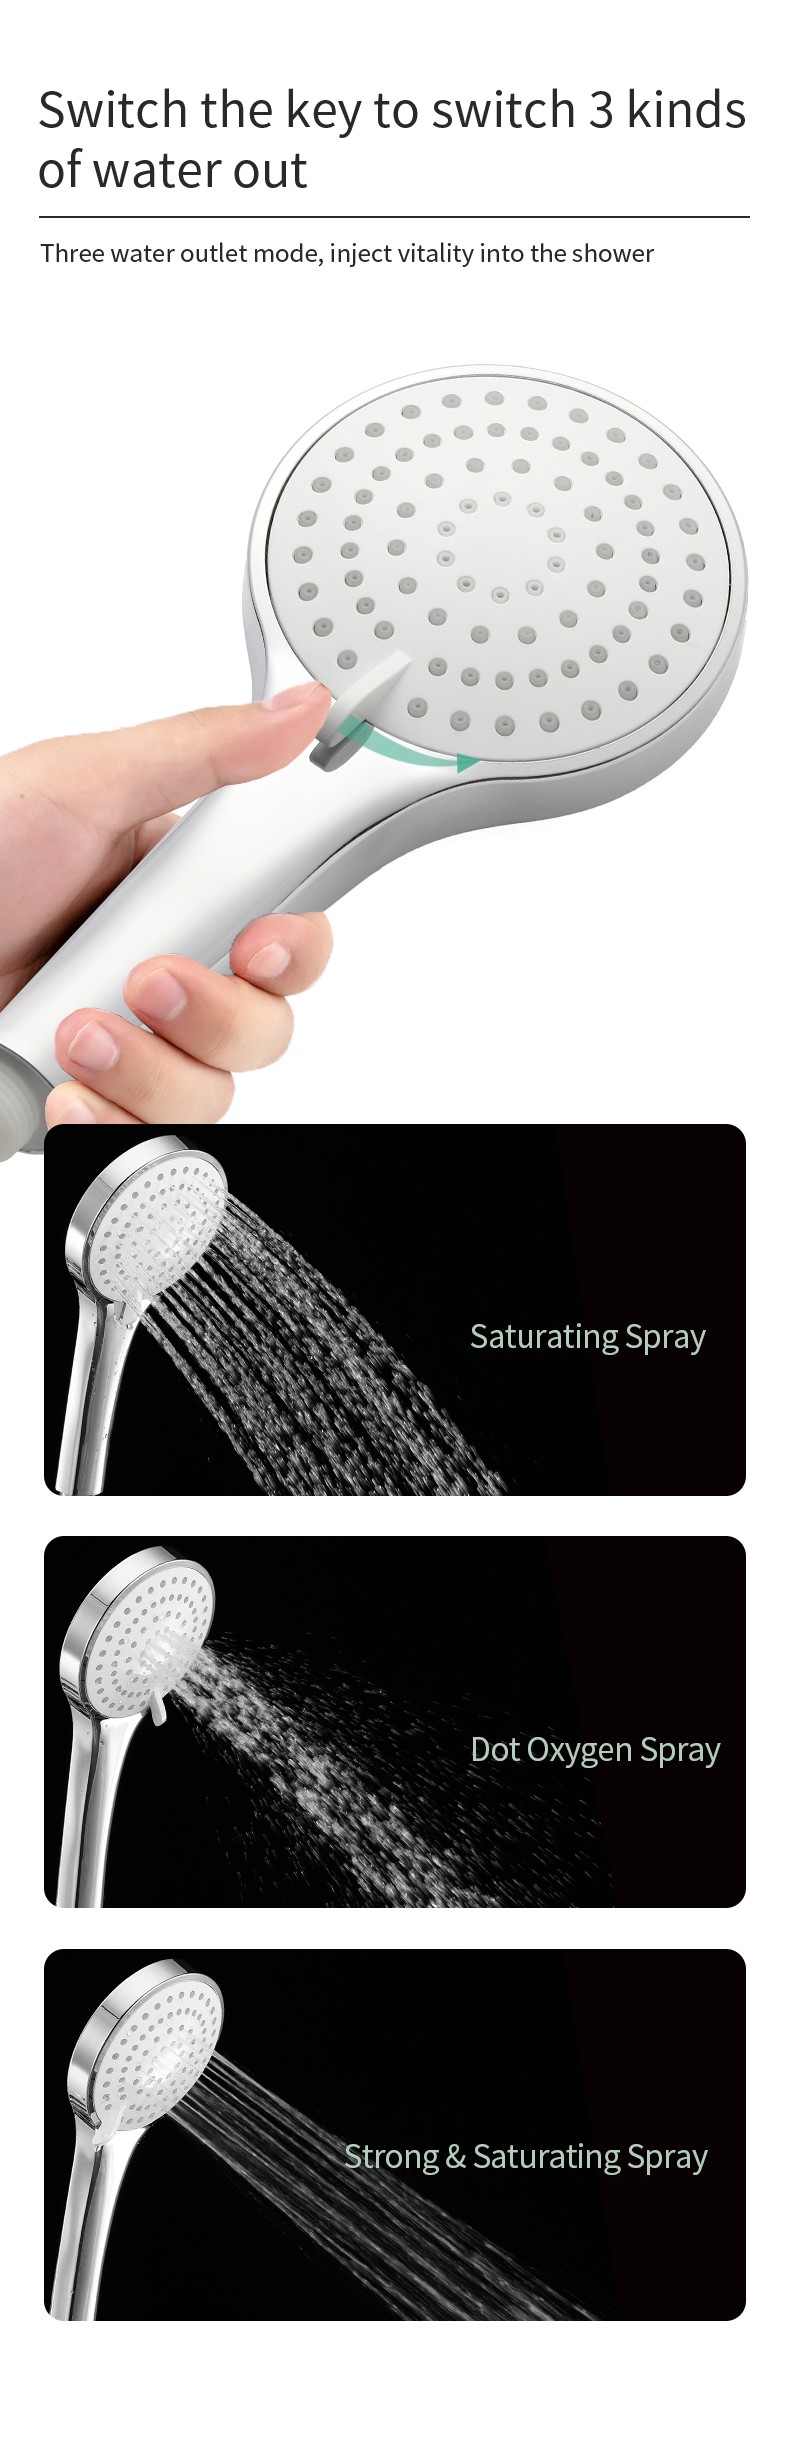 handheld showerhead with 3 spray settings